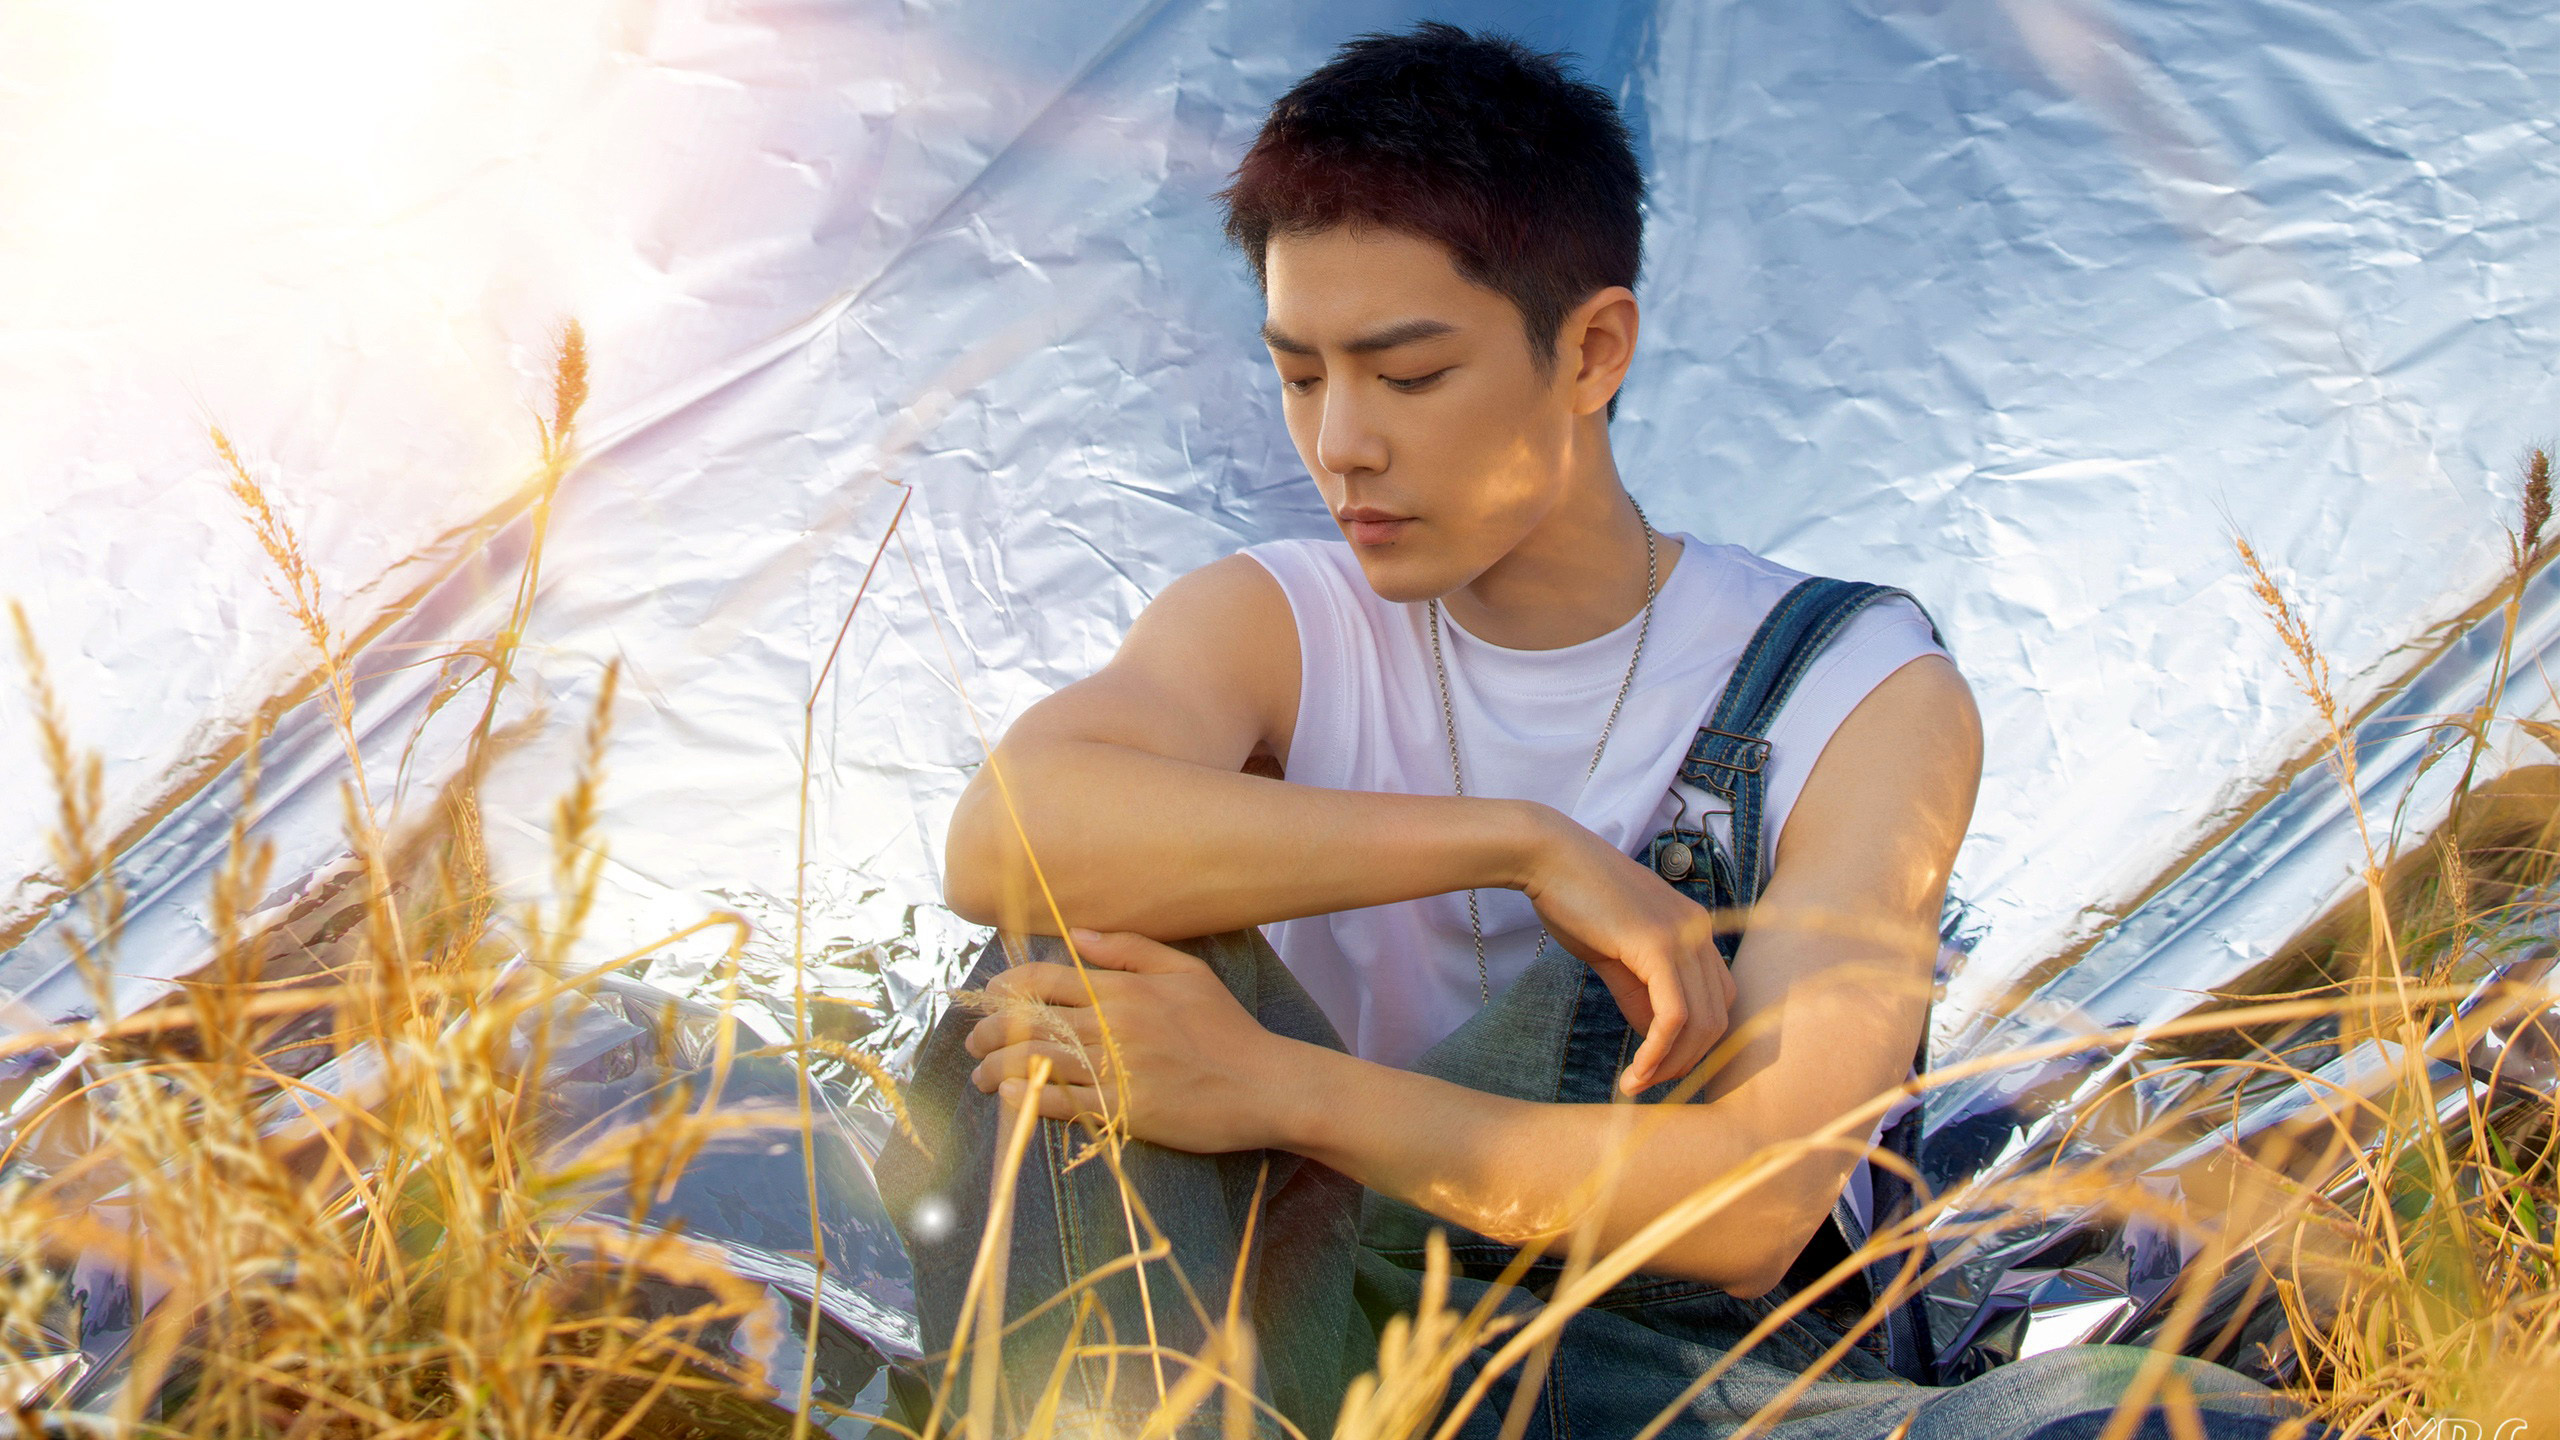 Xiao Zhan Is Sitting On Dry Grass In Crushed White Sheet Wallpaper Wearing White Blue Dress 2K Boys